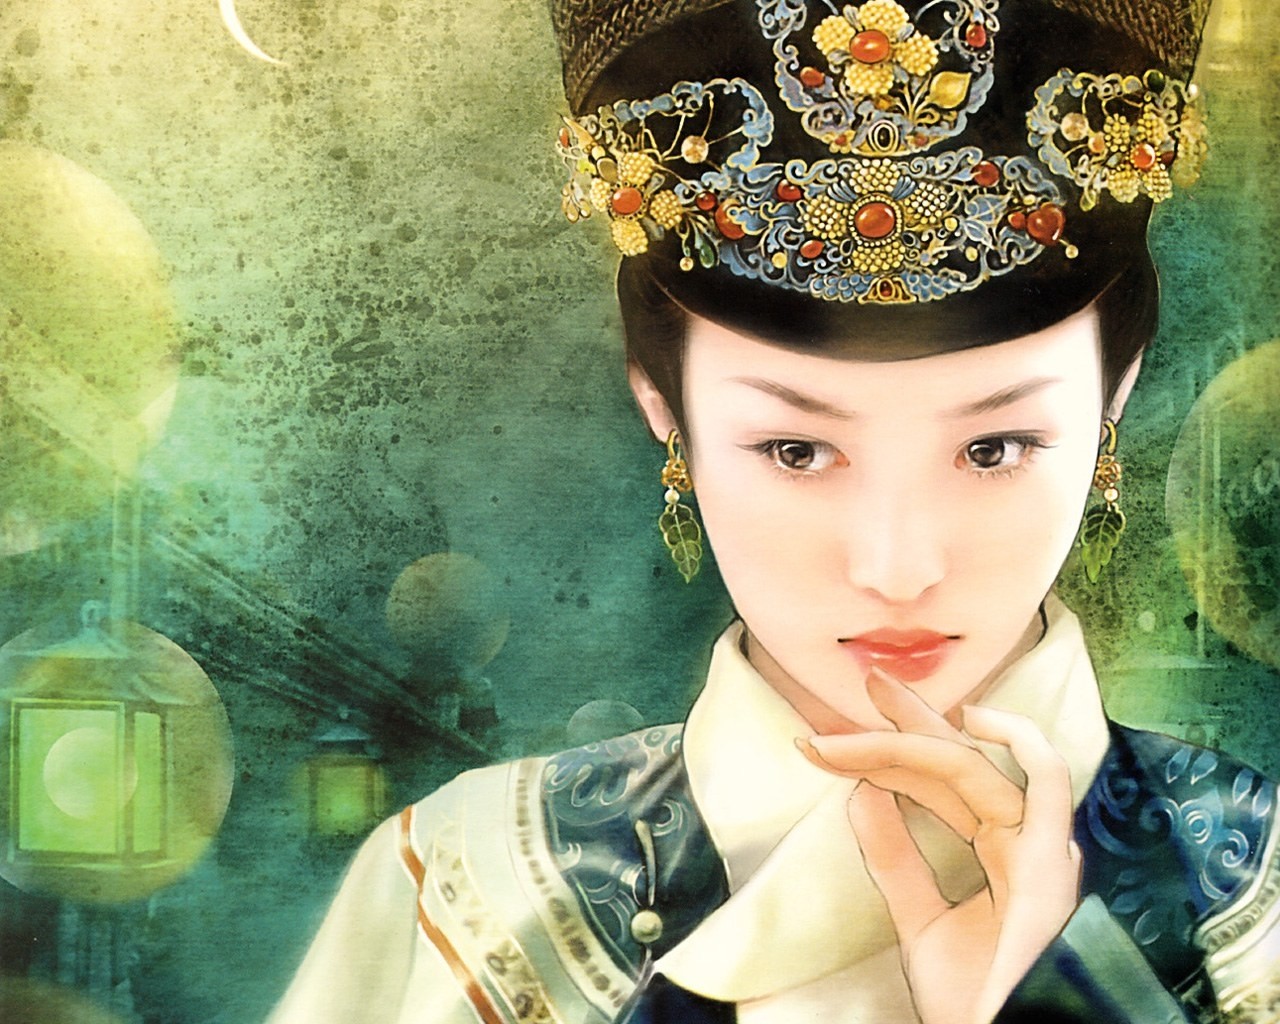 General 1280x1024 artwork women movie poster drawing Asian makeup dark eyes red lipstick face portrait